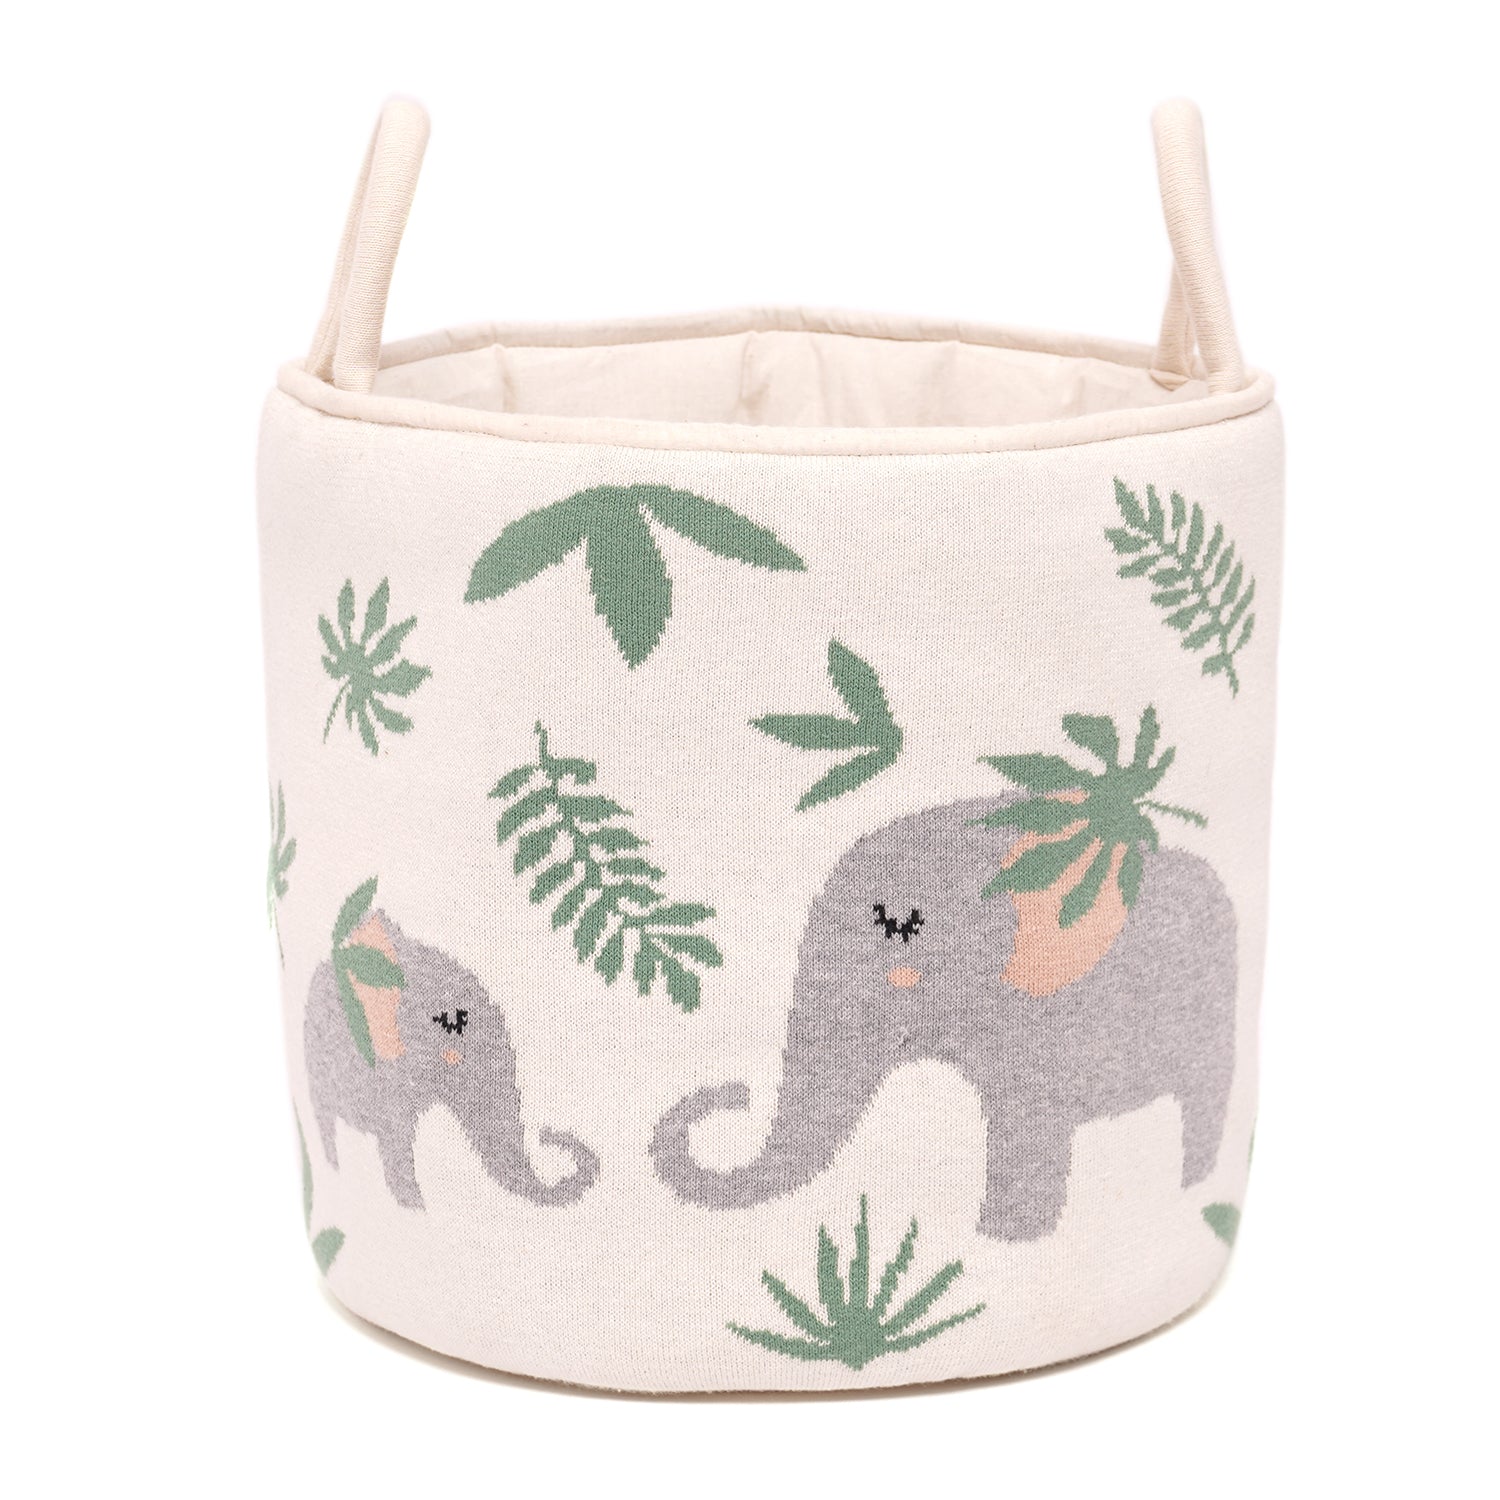 Tidy sleep 100% Cotton Knitted Elephant Print Multipurpose Storage Basket